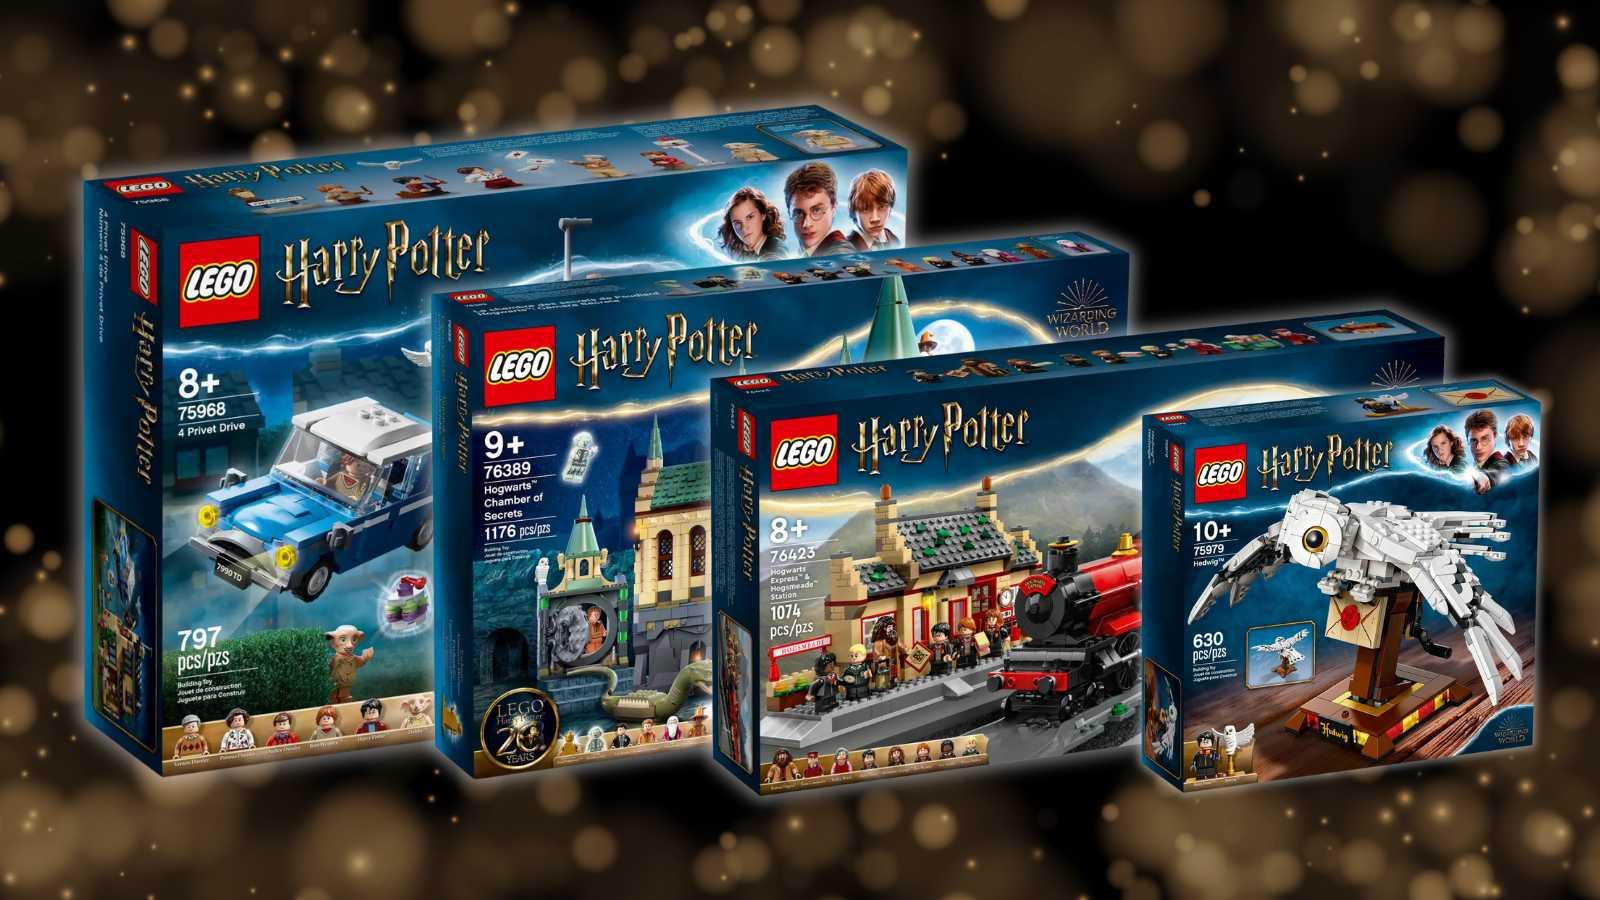 LEGO Harry Potter 76389 Hogwarts Chamber of Secrets review